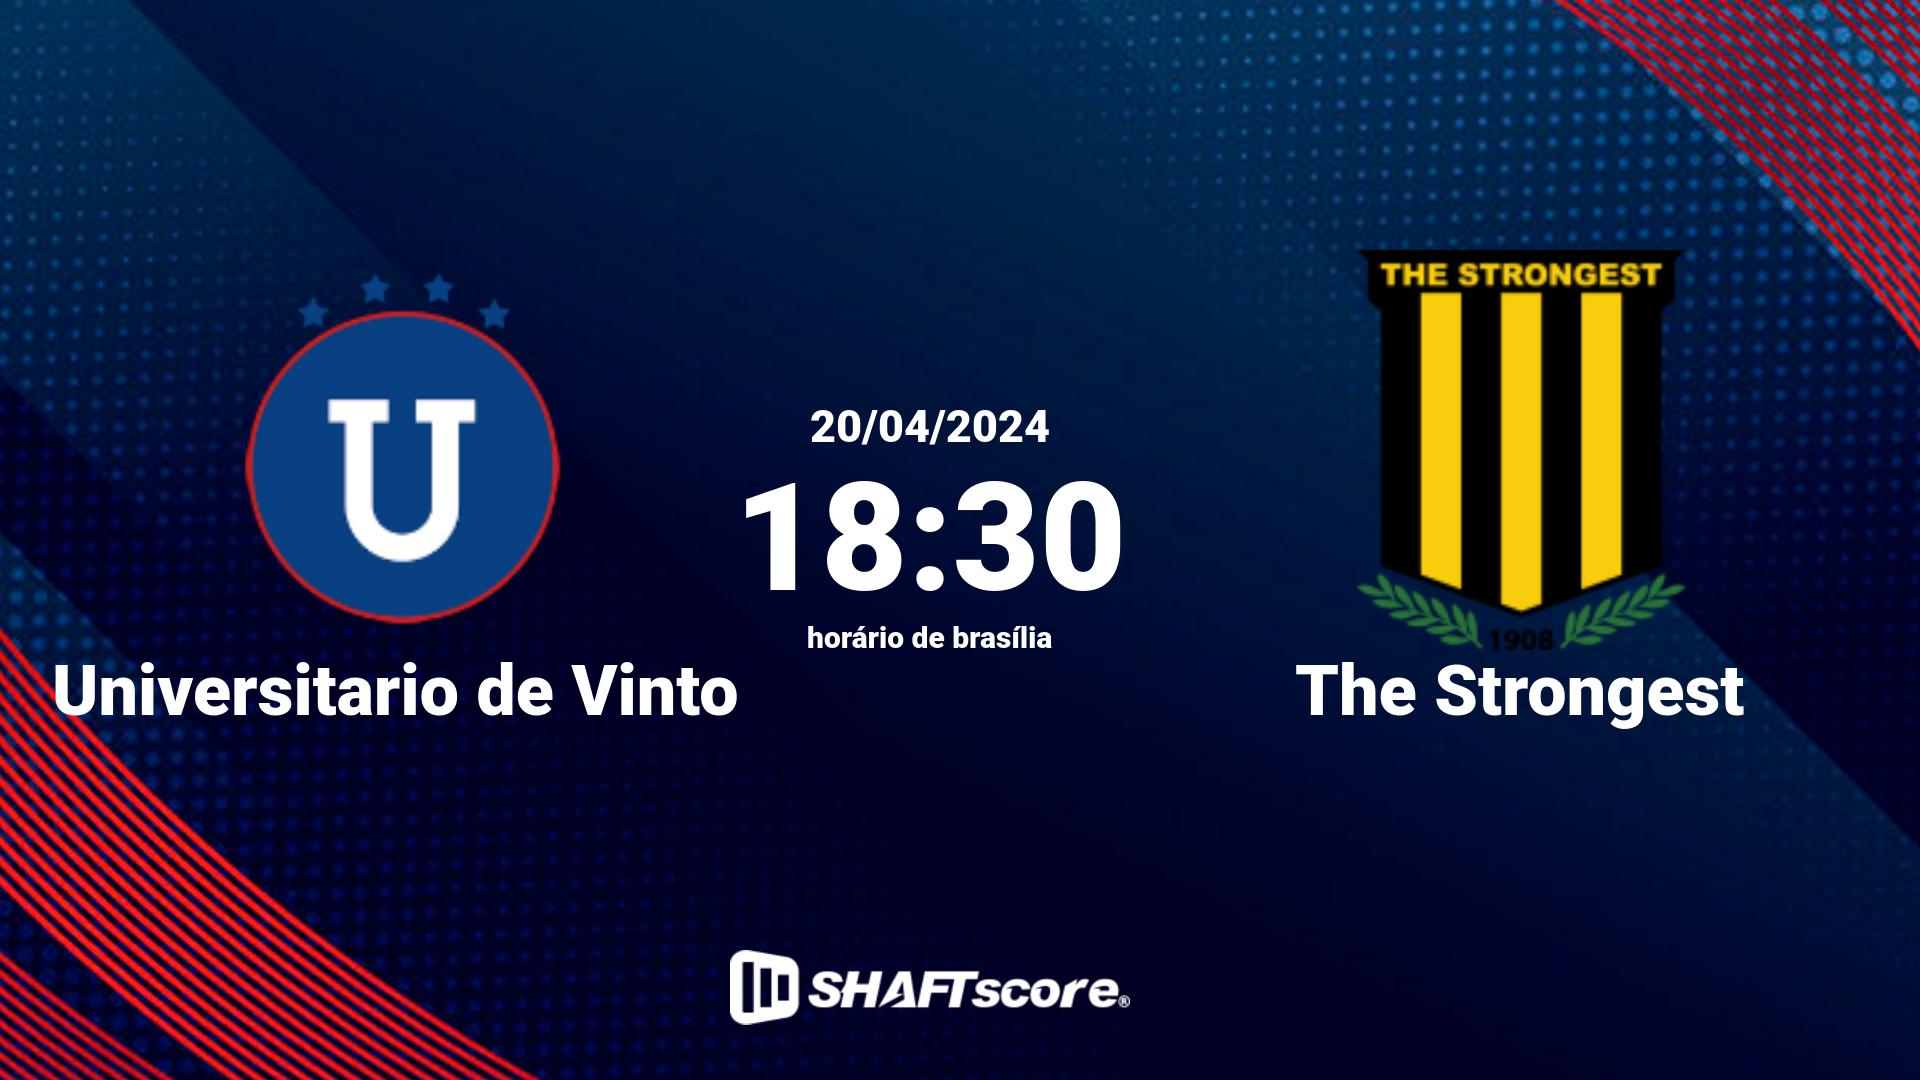 Estatísticas do jogo Universitario de Vinto vs The Strongest 20.04 18:30